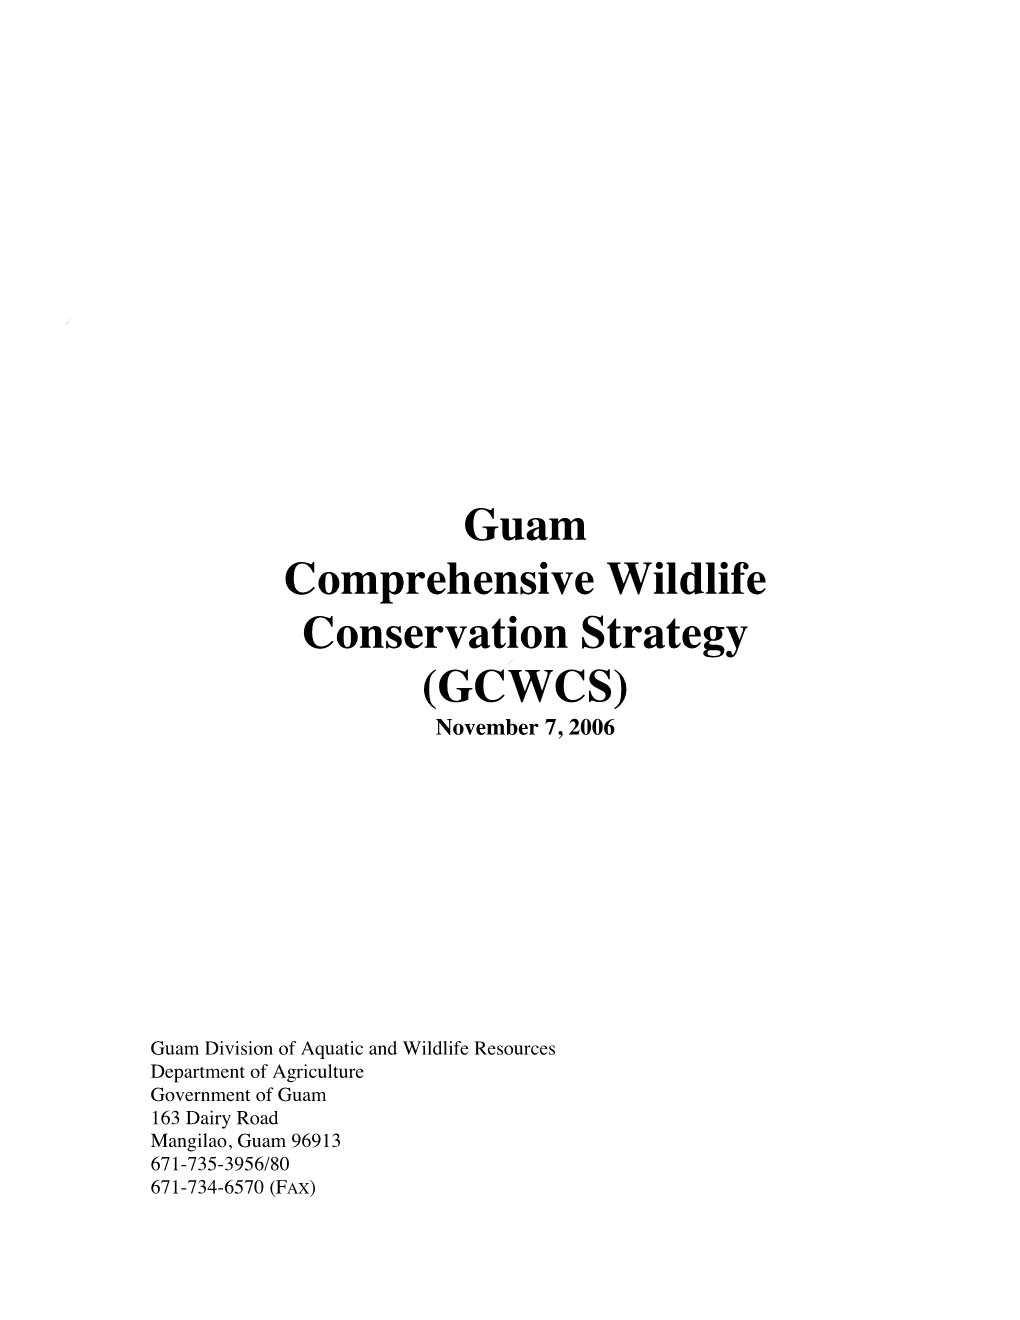 Guam Comprehensive Wildlife Conservation Strategy (GCWCS) November 7, 2006